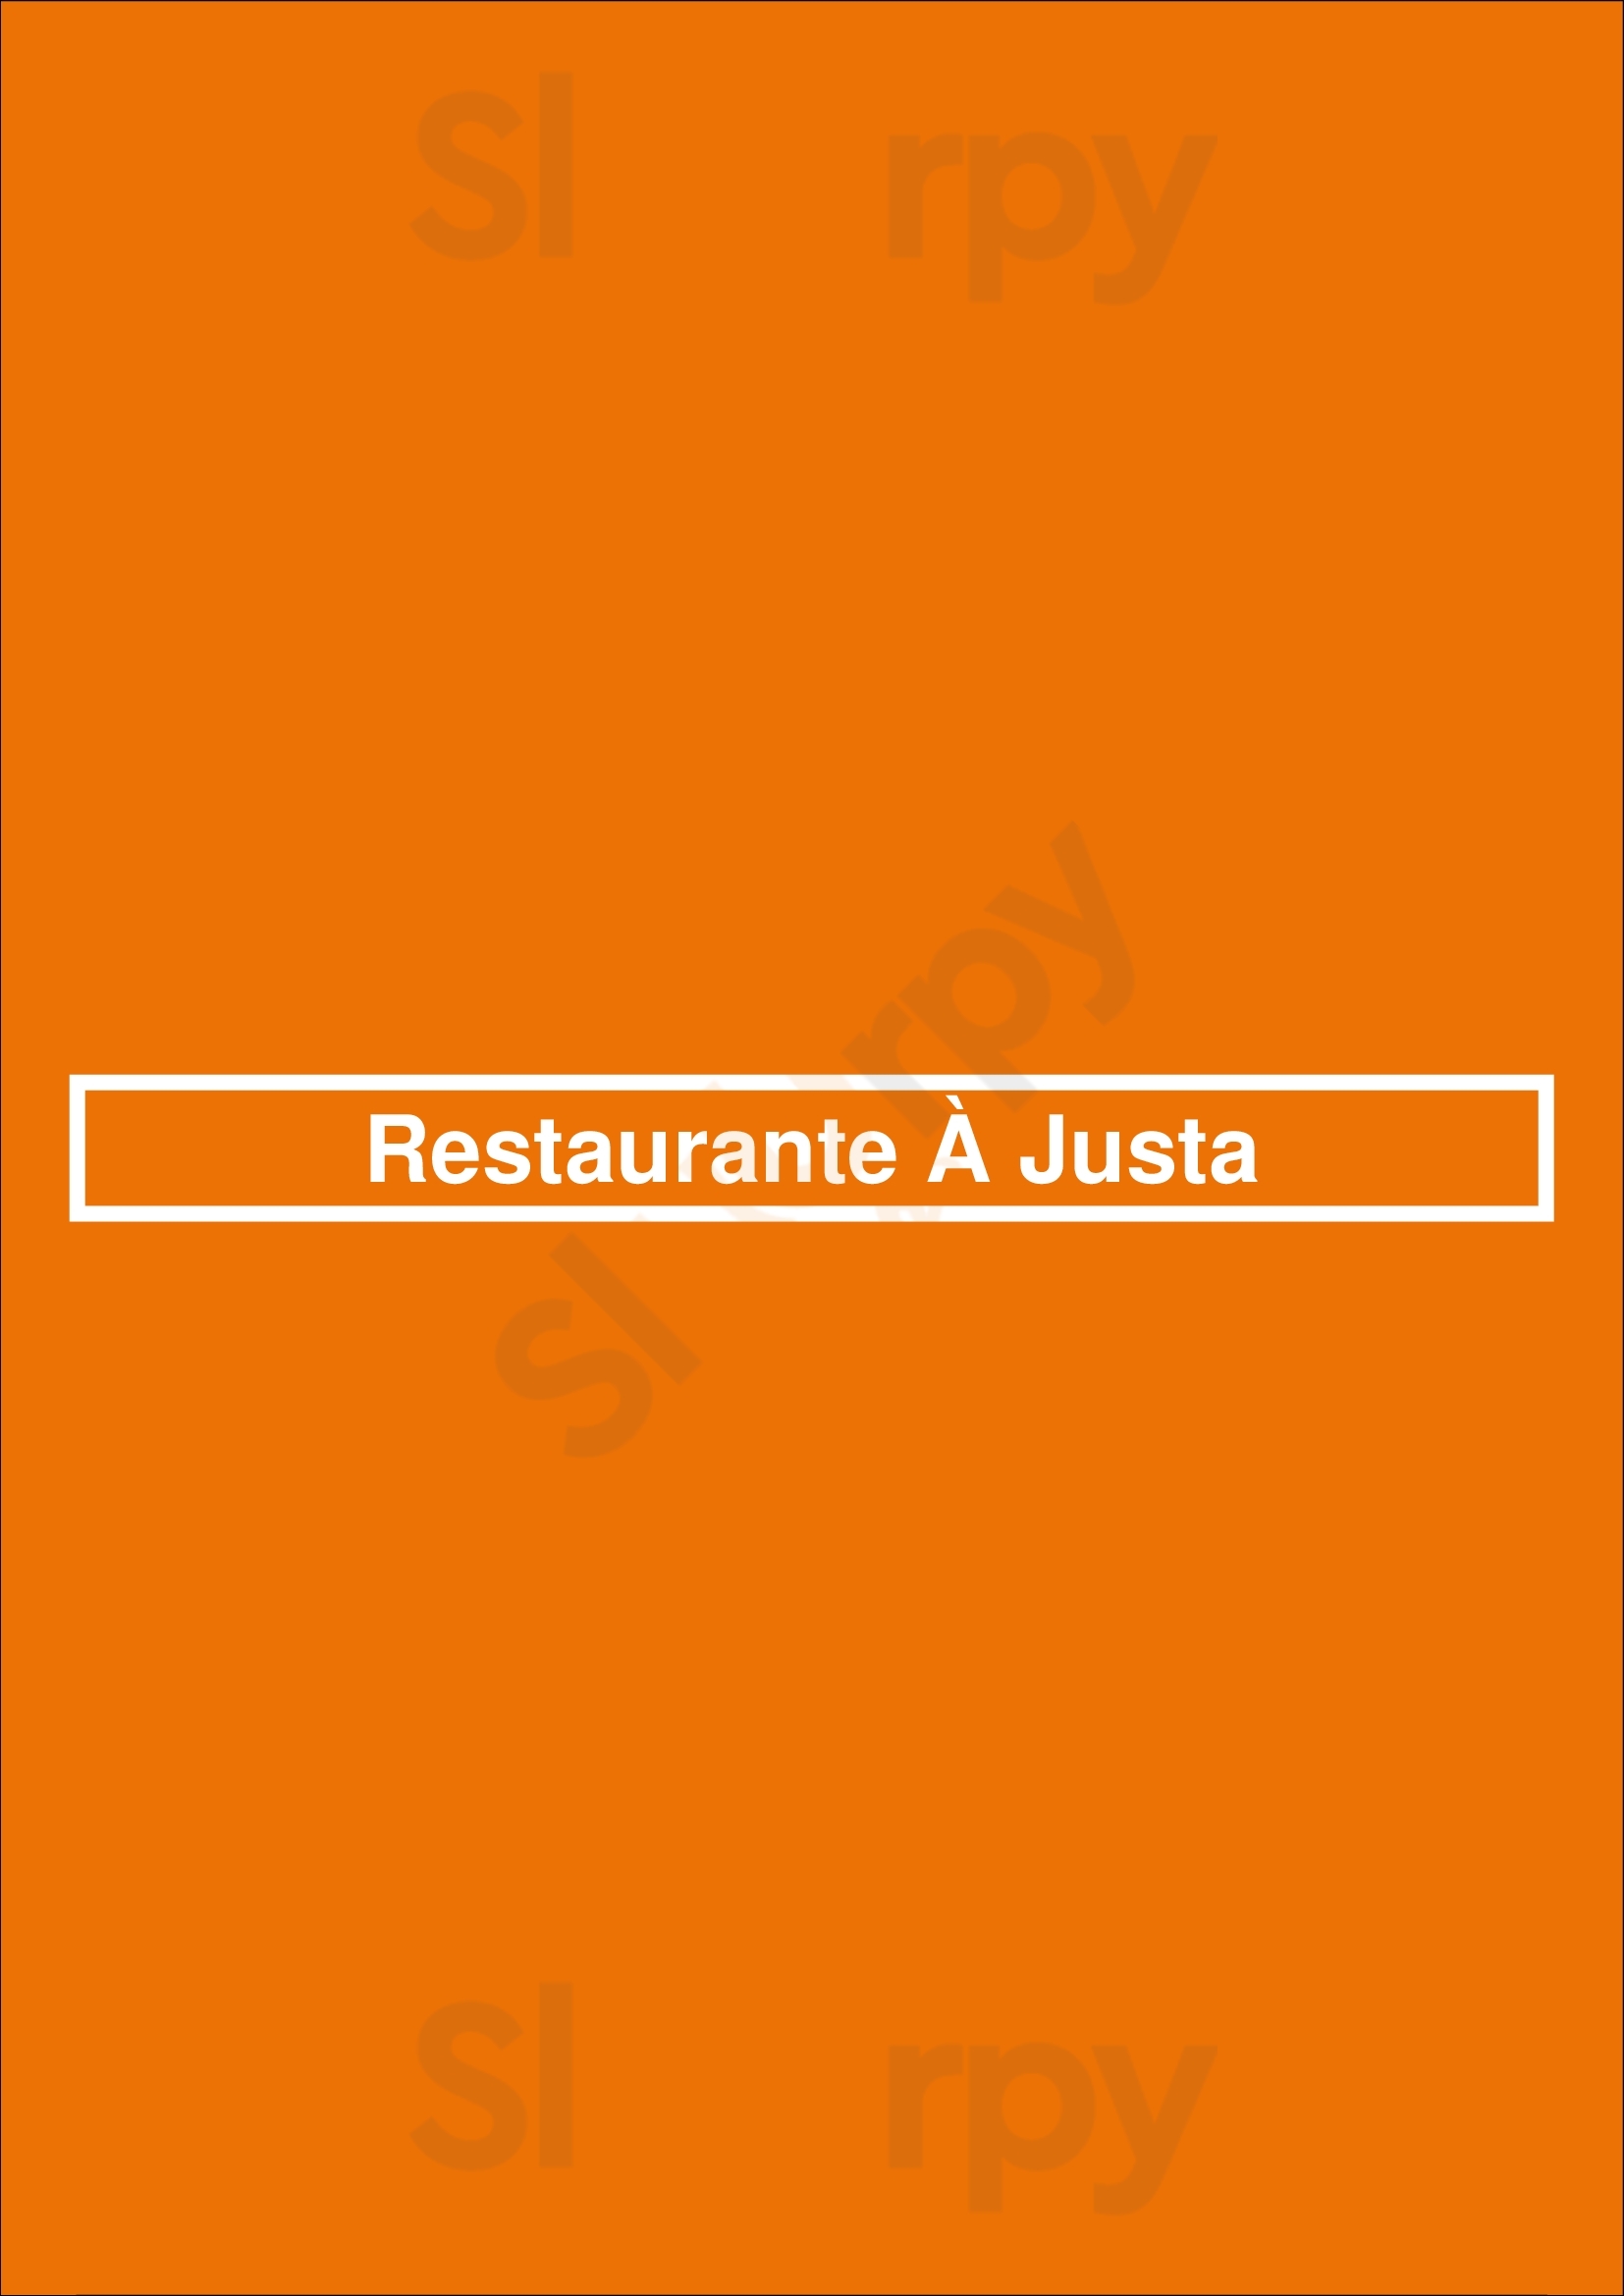 Restaurante À Justa Lisboa Menu - 1